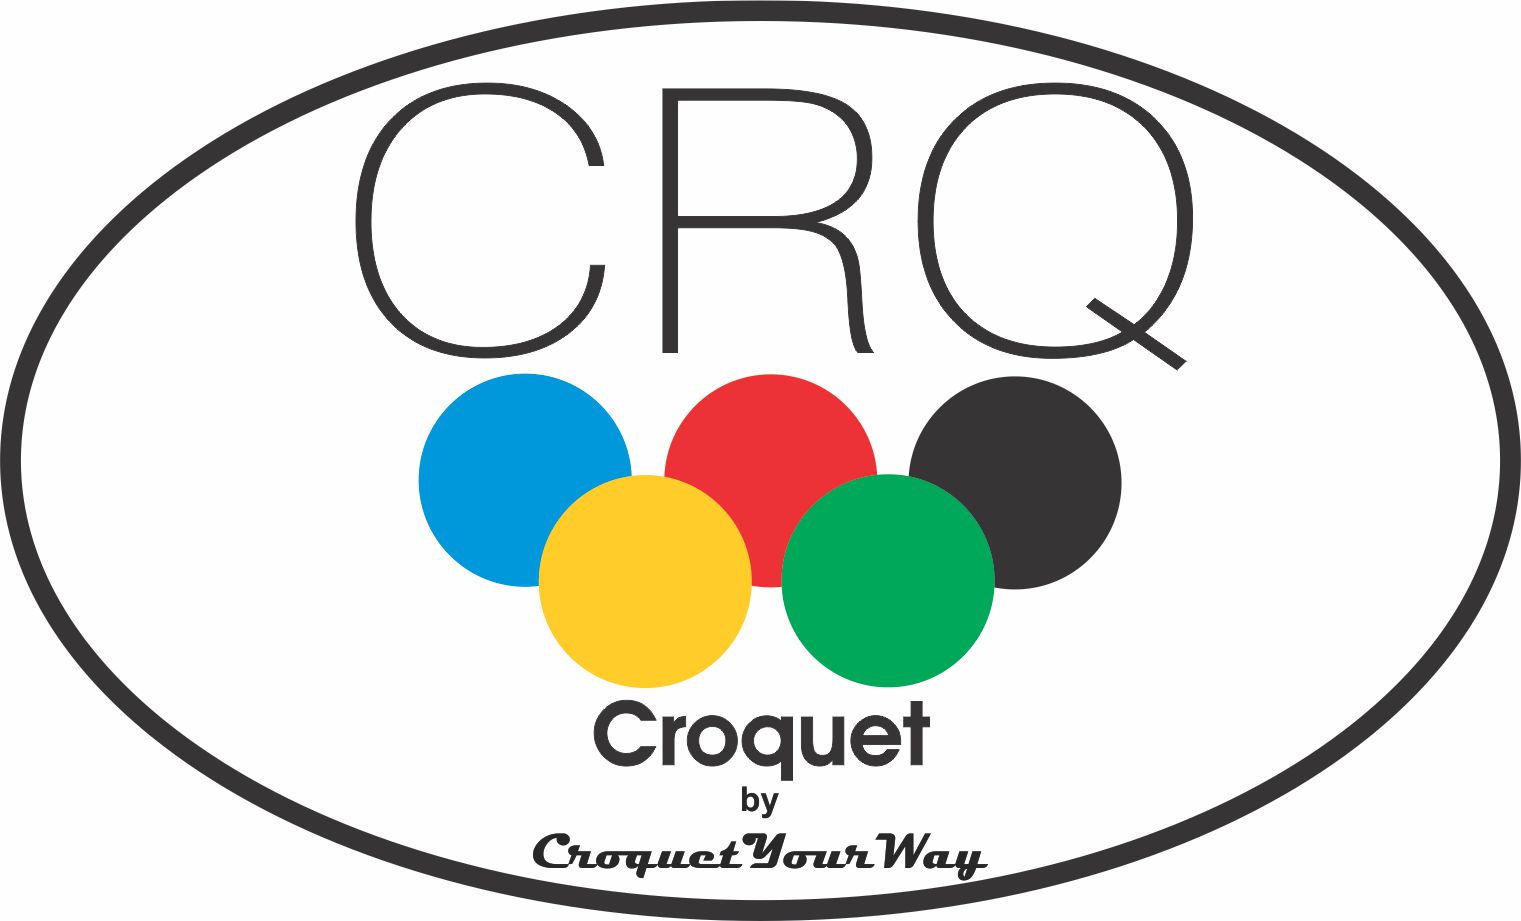 CRQ 714 Croquet Balls CRQ PRO-BALZ, USA, Classic, High Action, 10.8 oz, Green